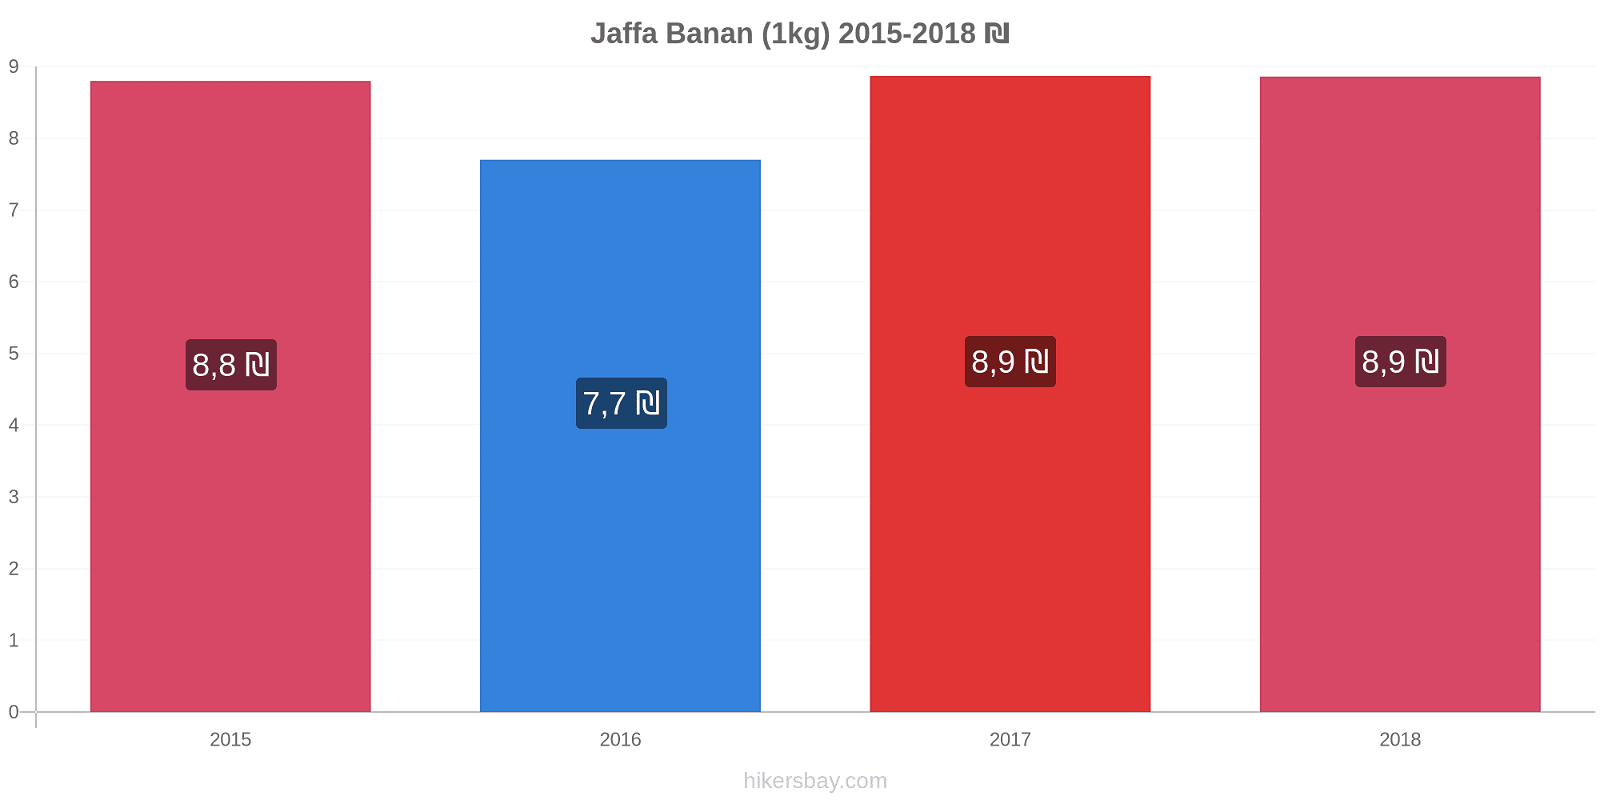 Jaffa prisændringer Banan (1kg) hikersbay.com